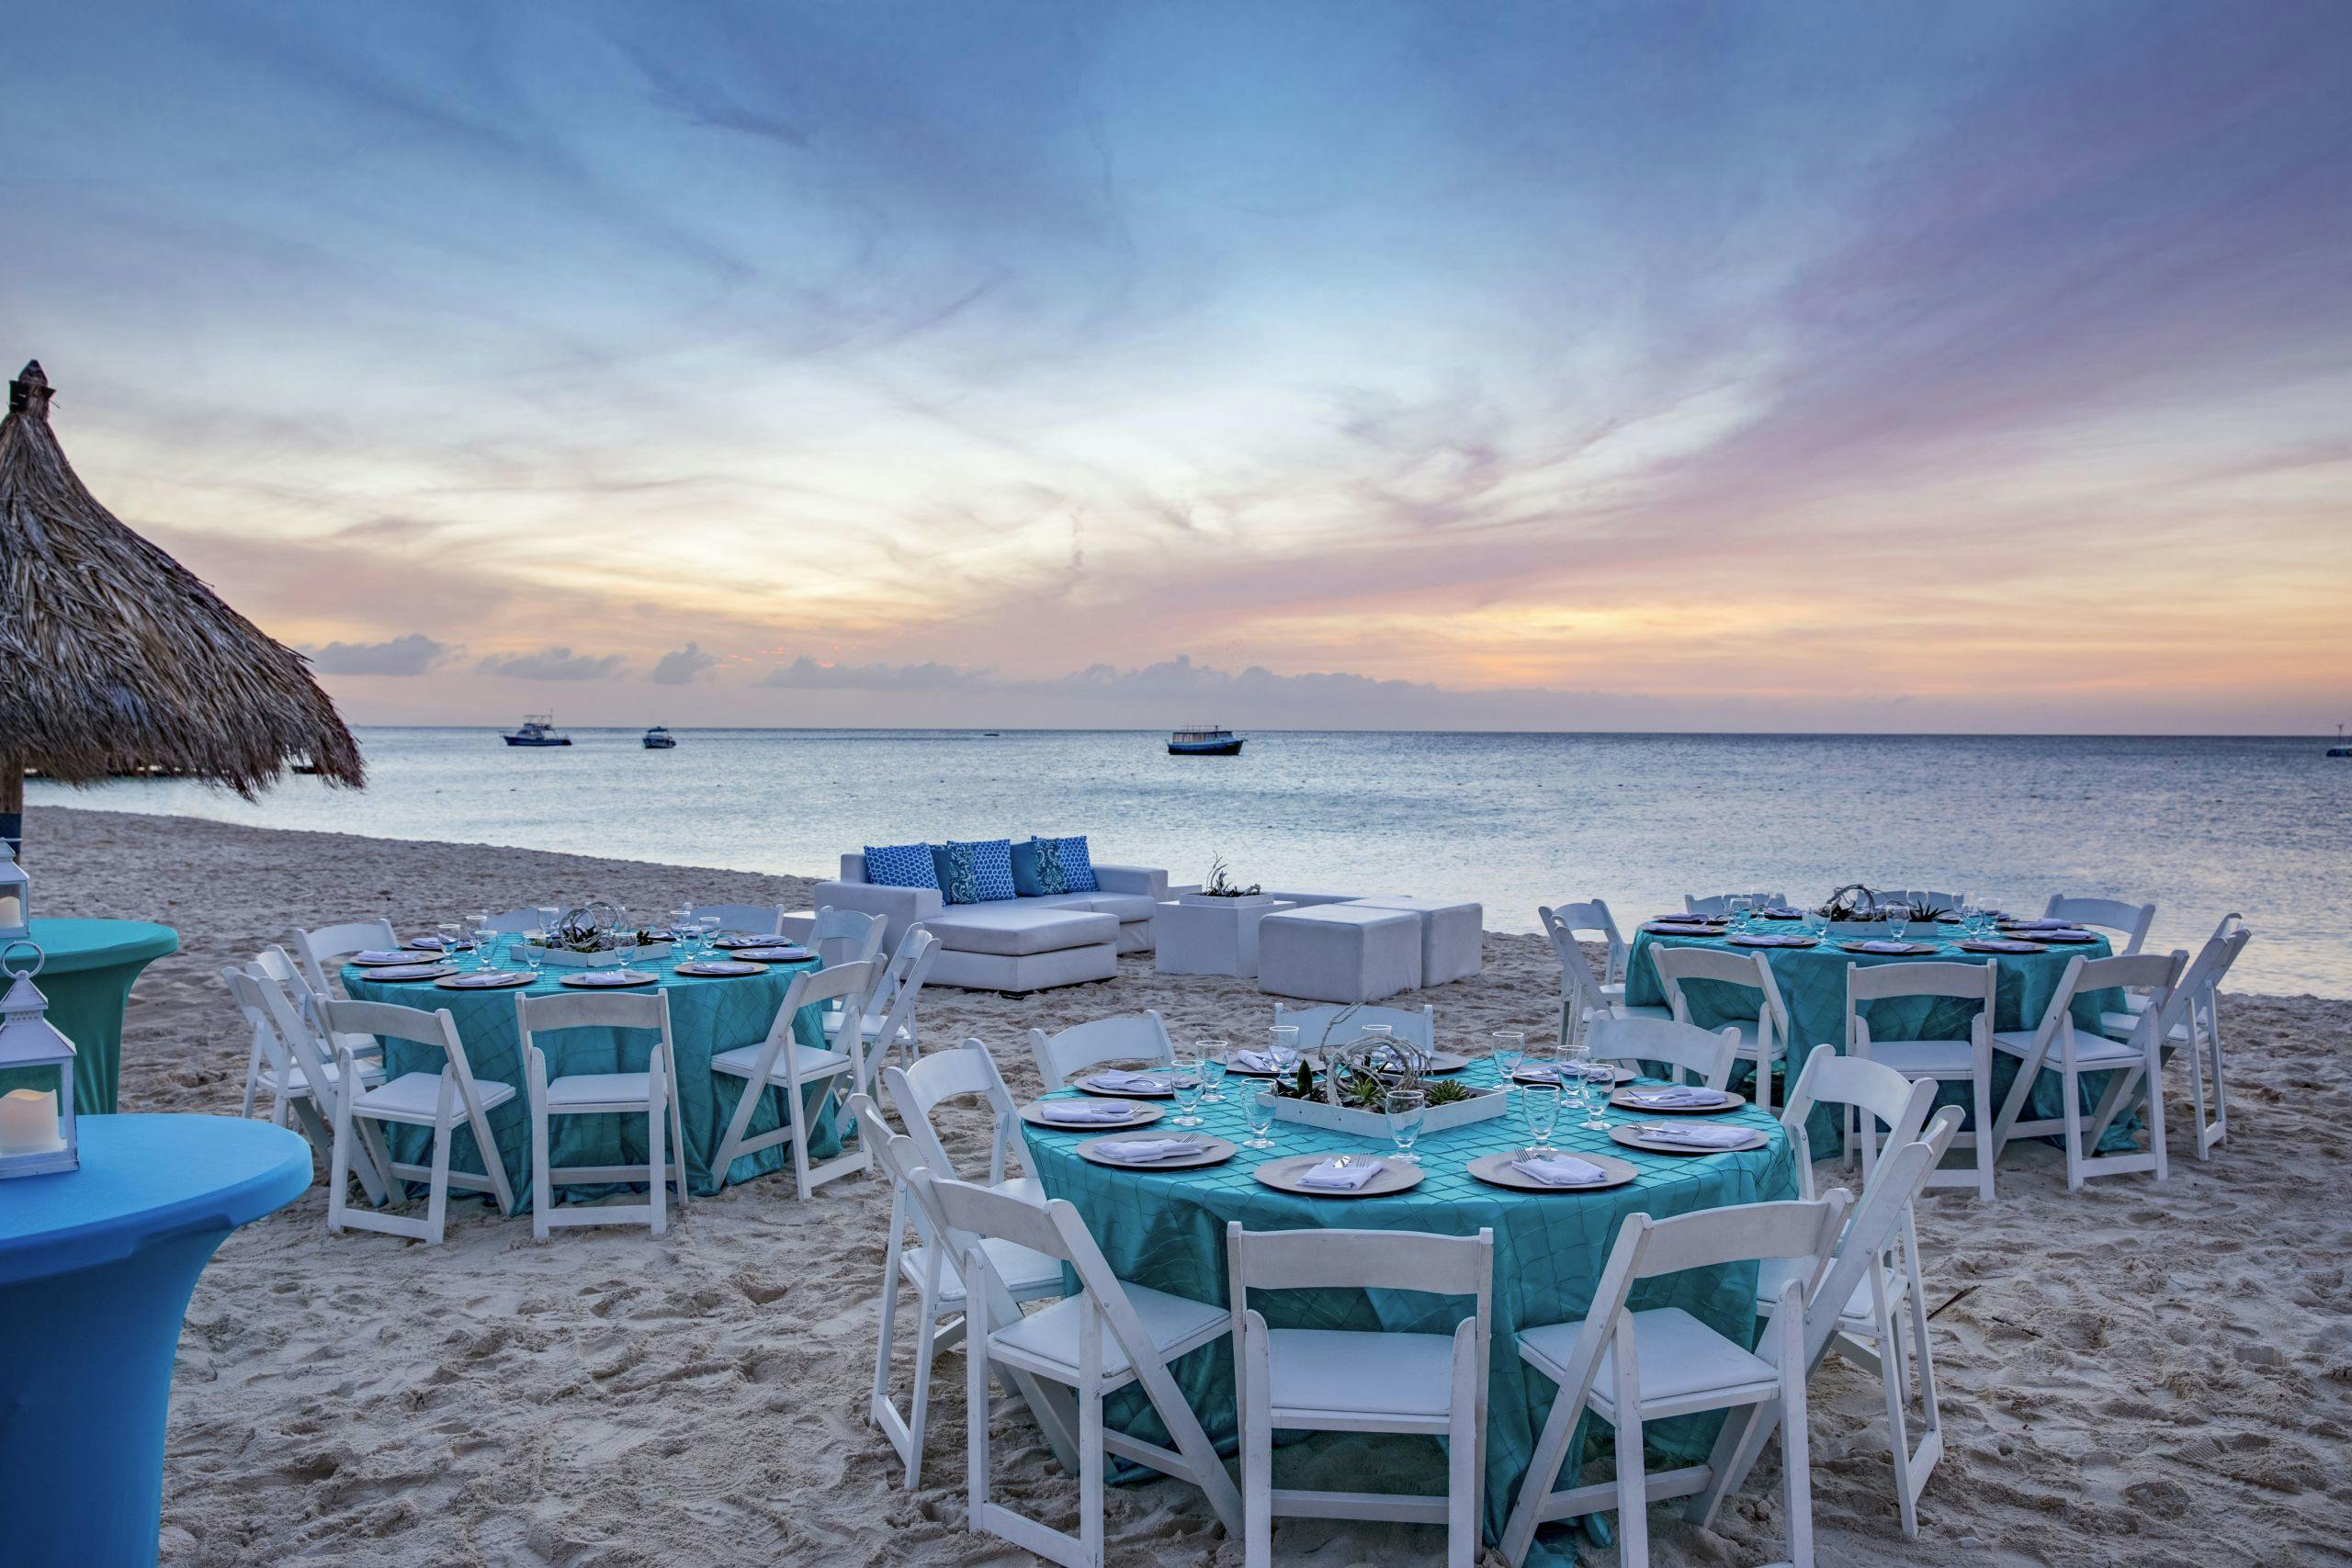  Farewell Dinner and Awards Ceremony at Hilton Aruba Caribbean Resort & Casino